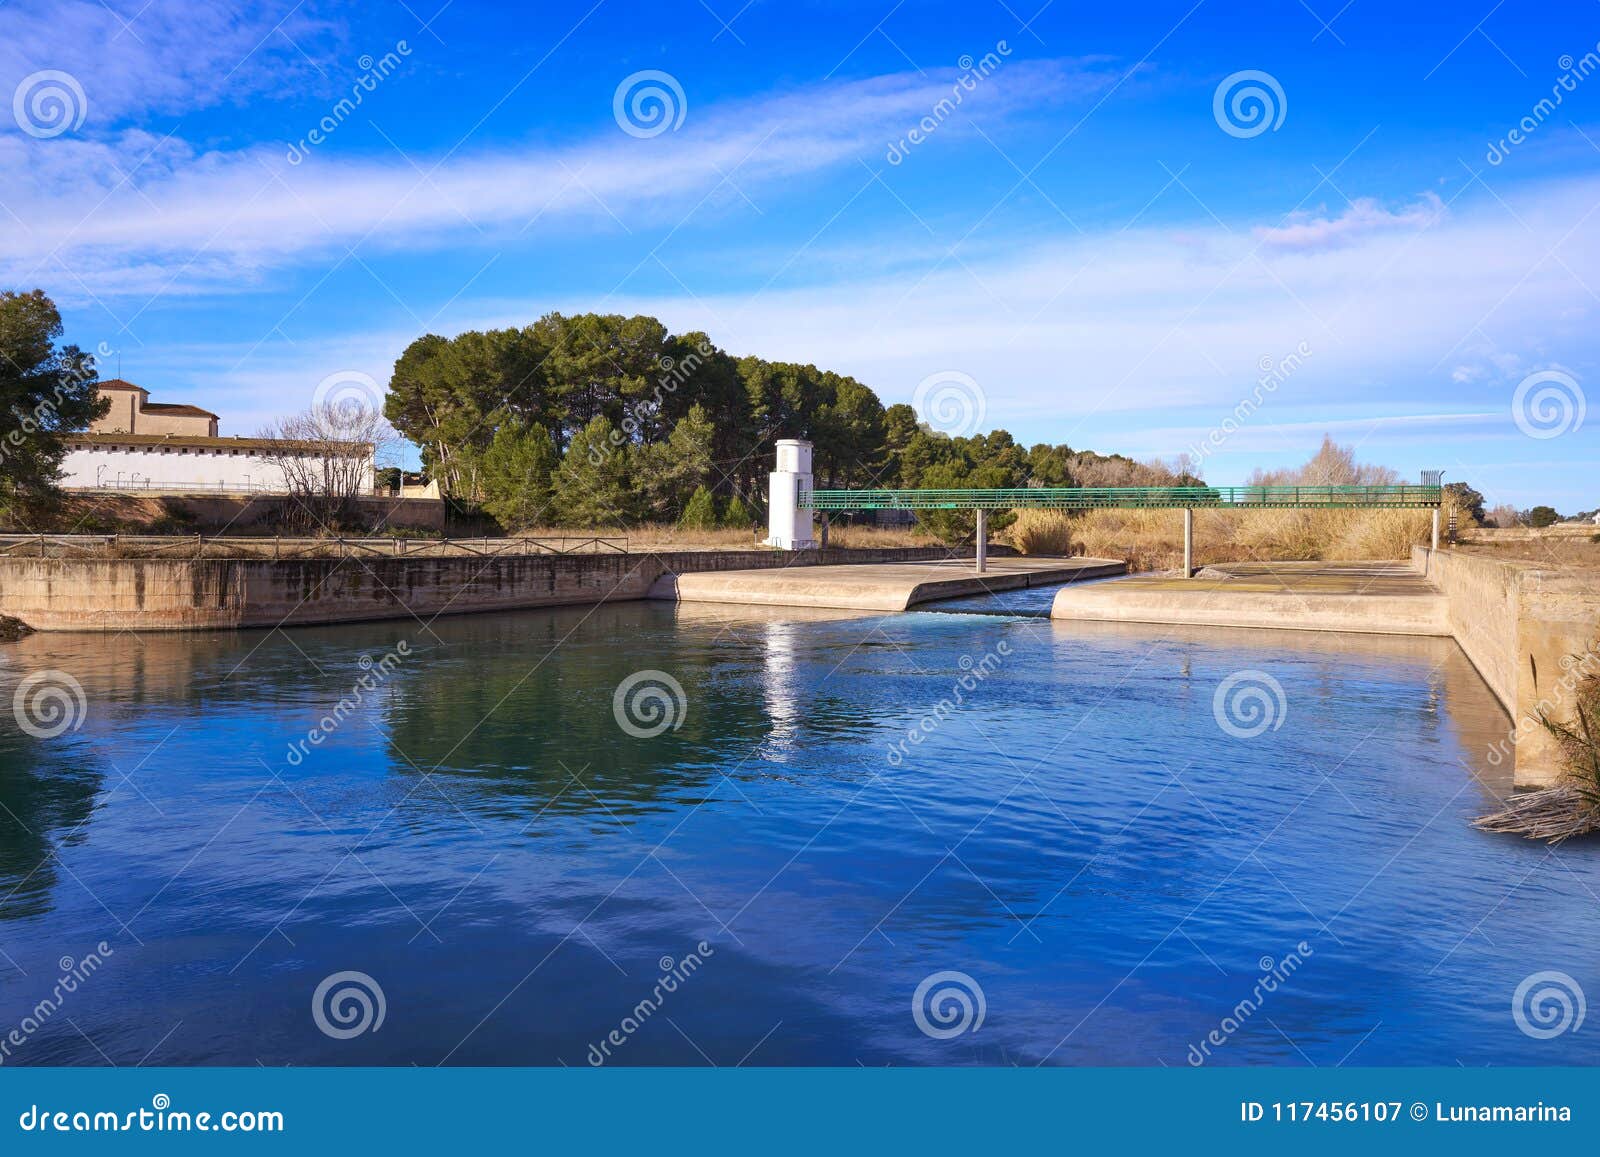 la presa dam in turia river park of valencia spain